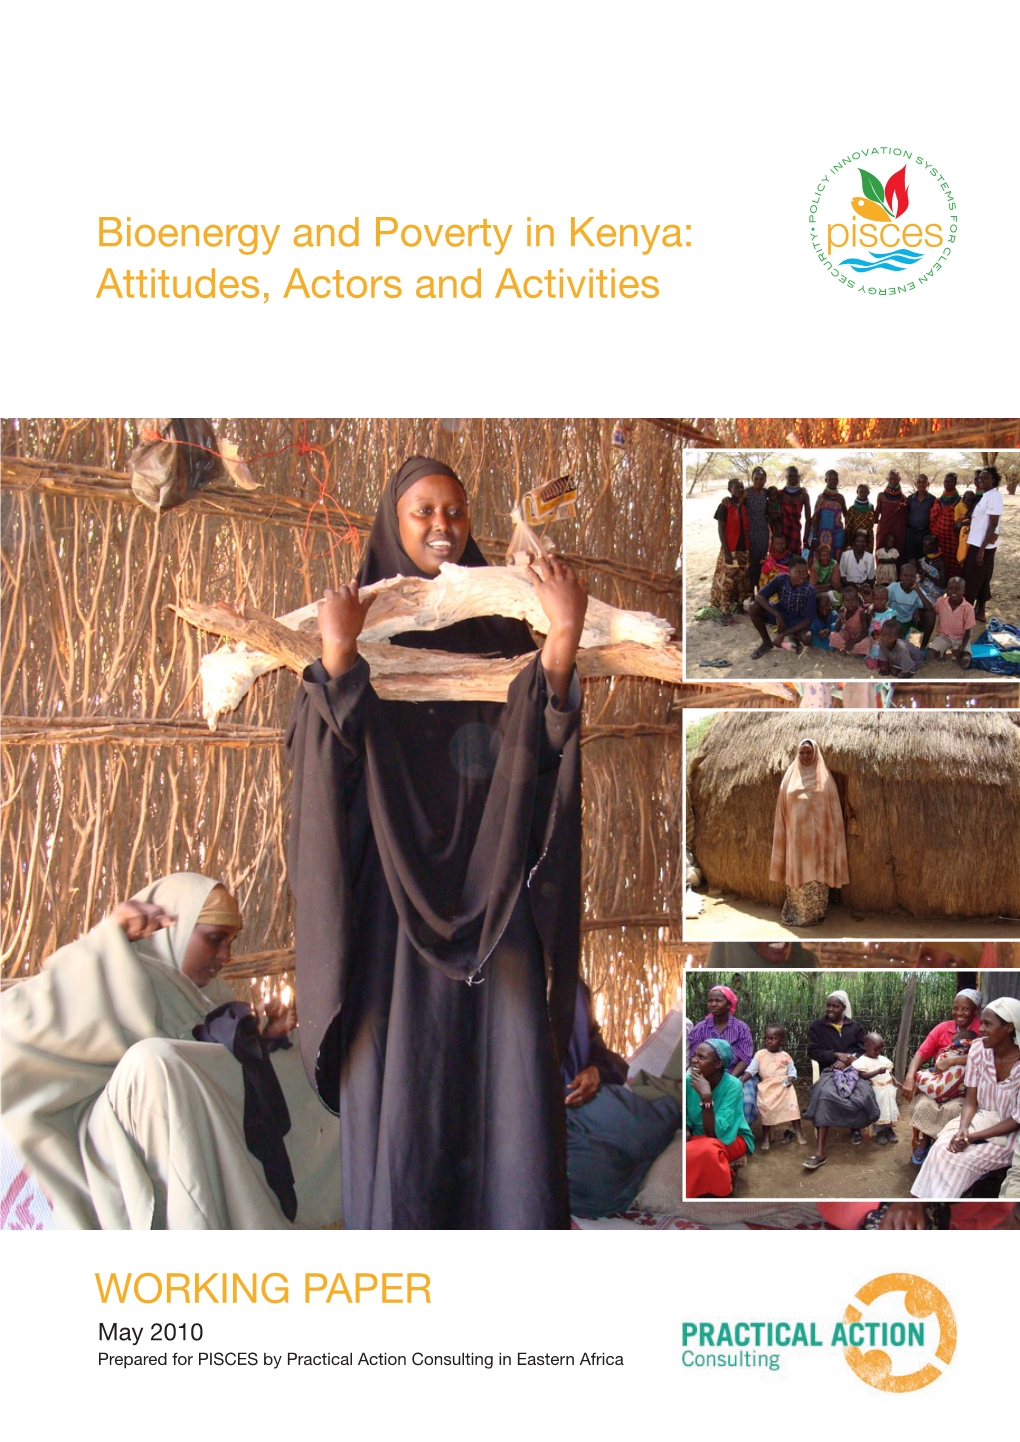 Bioenergy and Poverty in Kenya: Attitudes, Actors and Activities